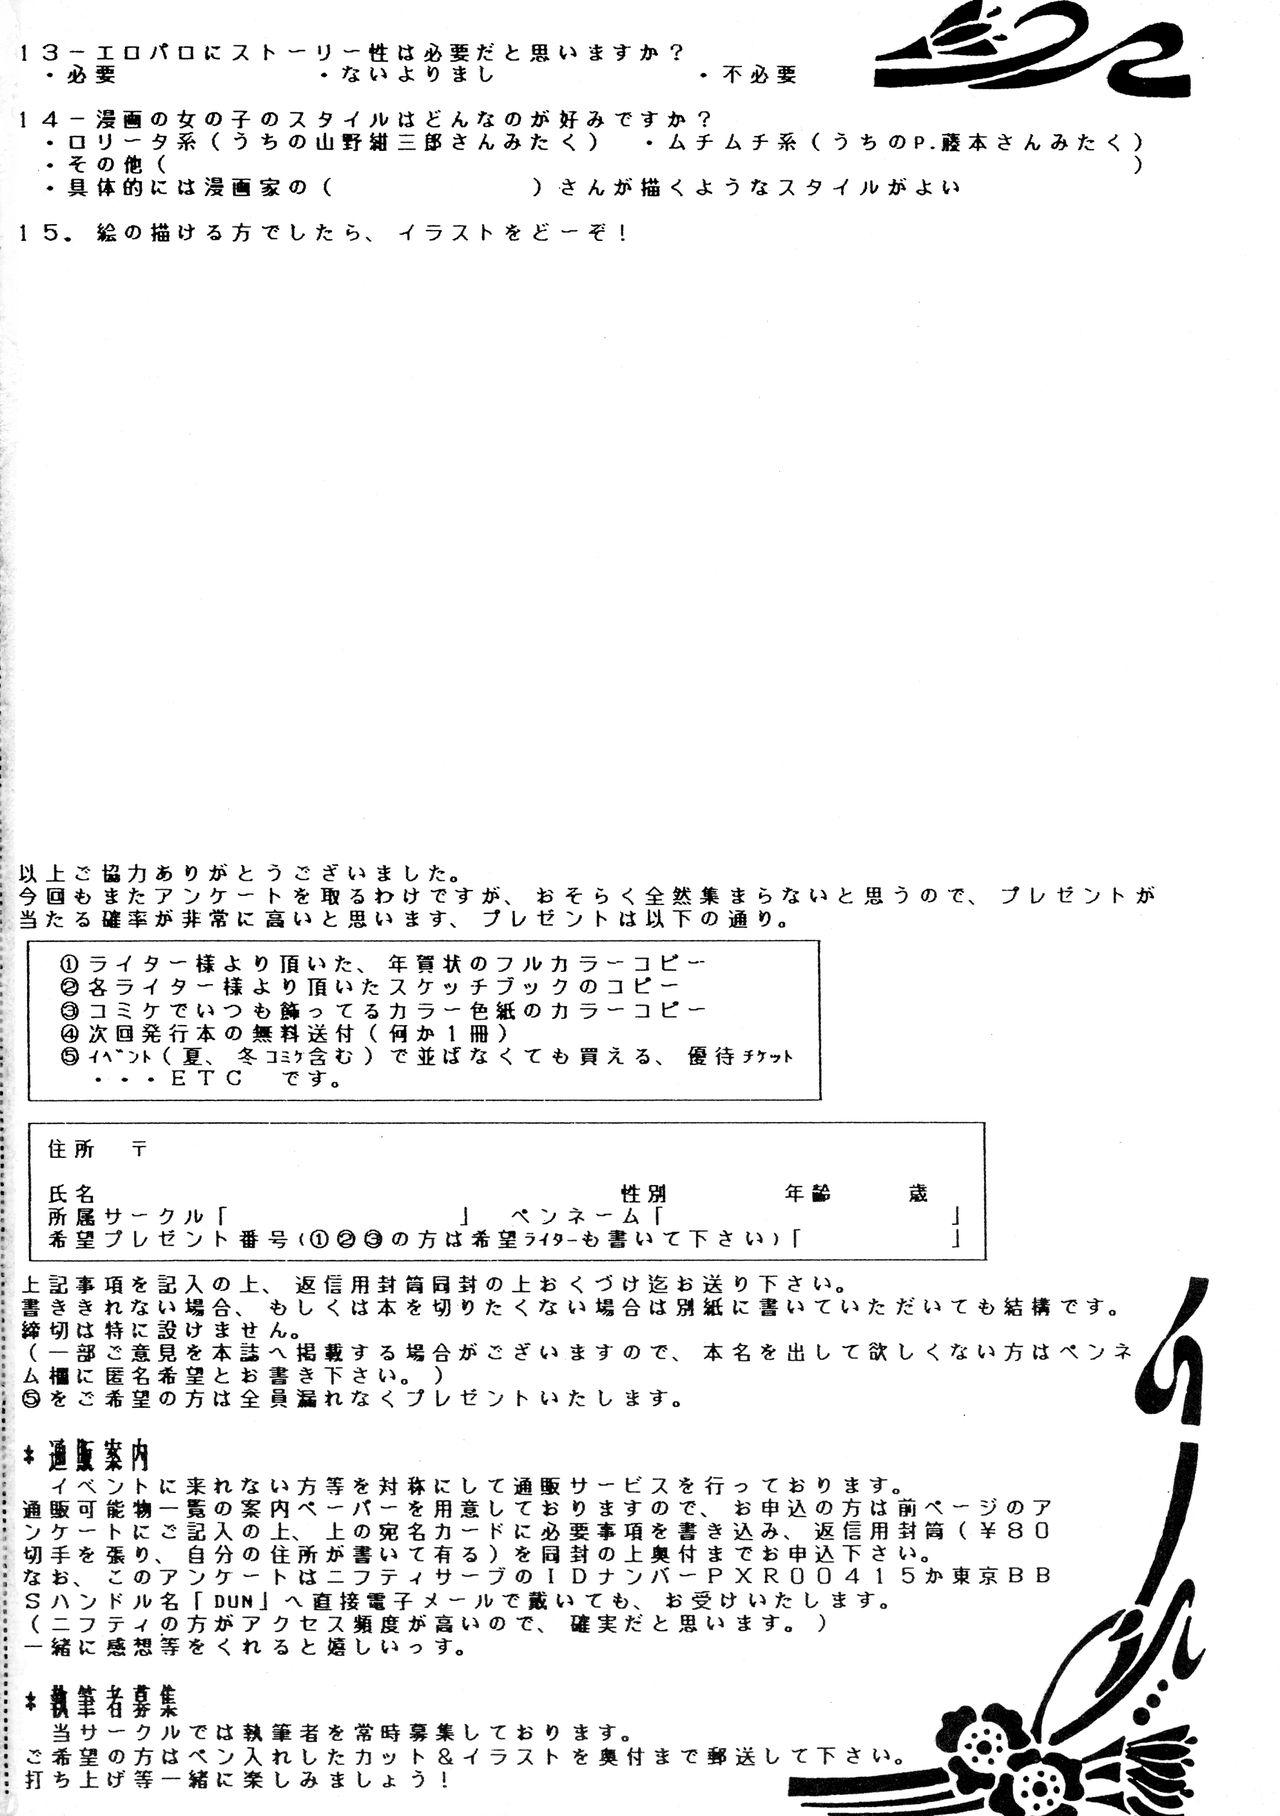 Cdmx Goku tamashi Young - Page 90